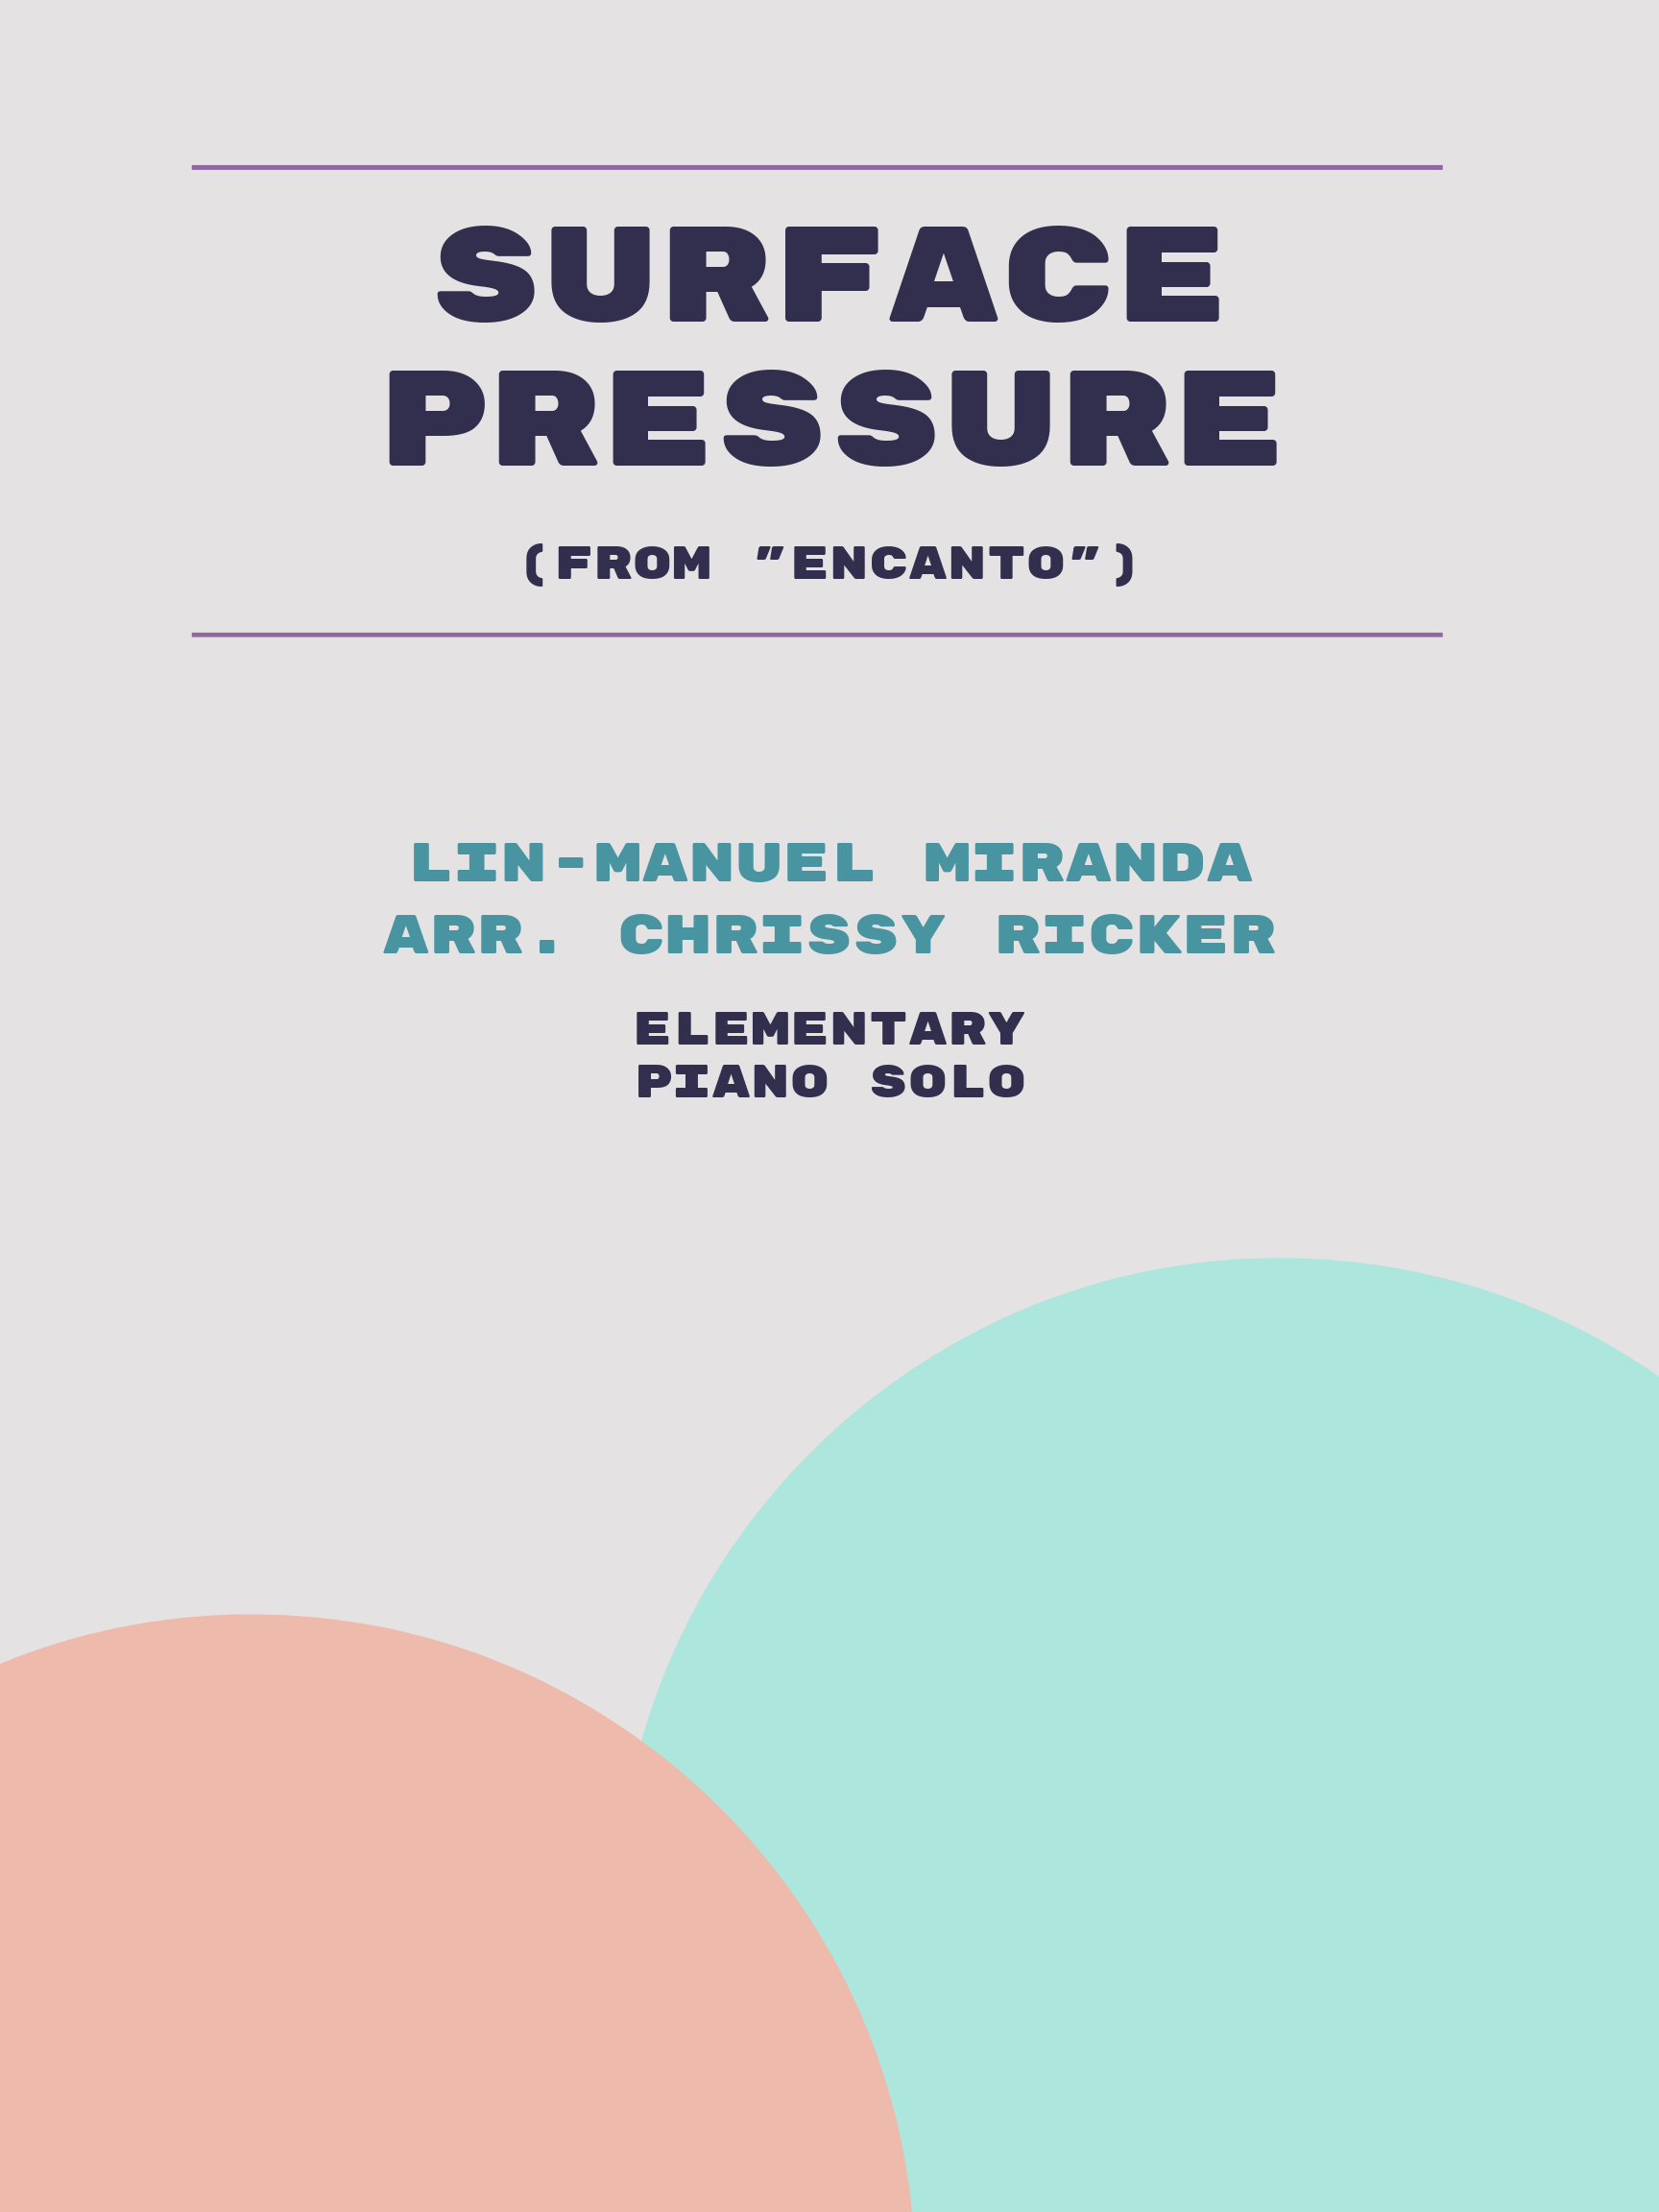 Surface Pressure by Lin-Manuel Miranda